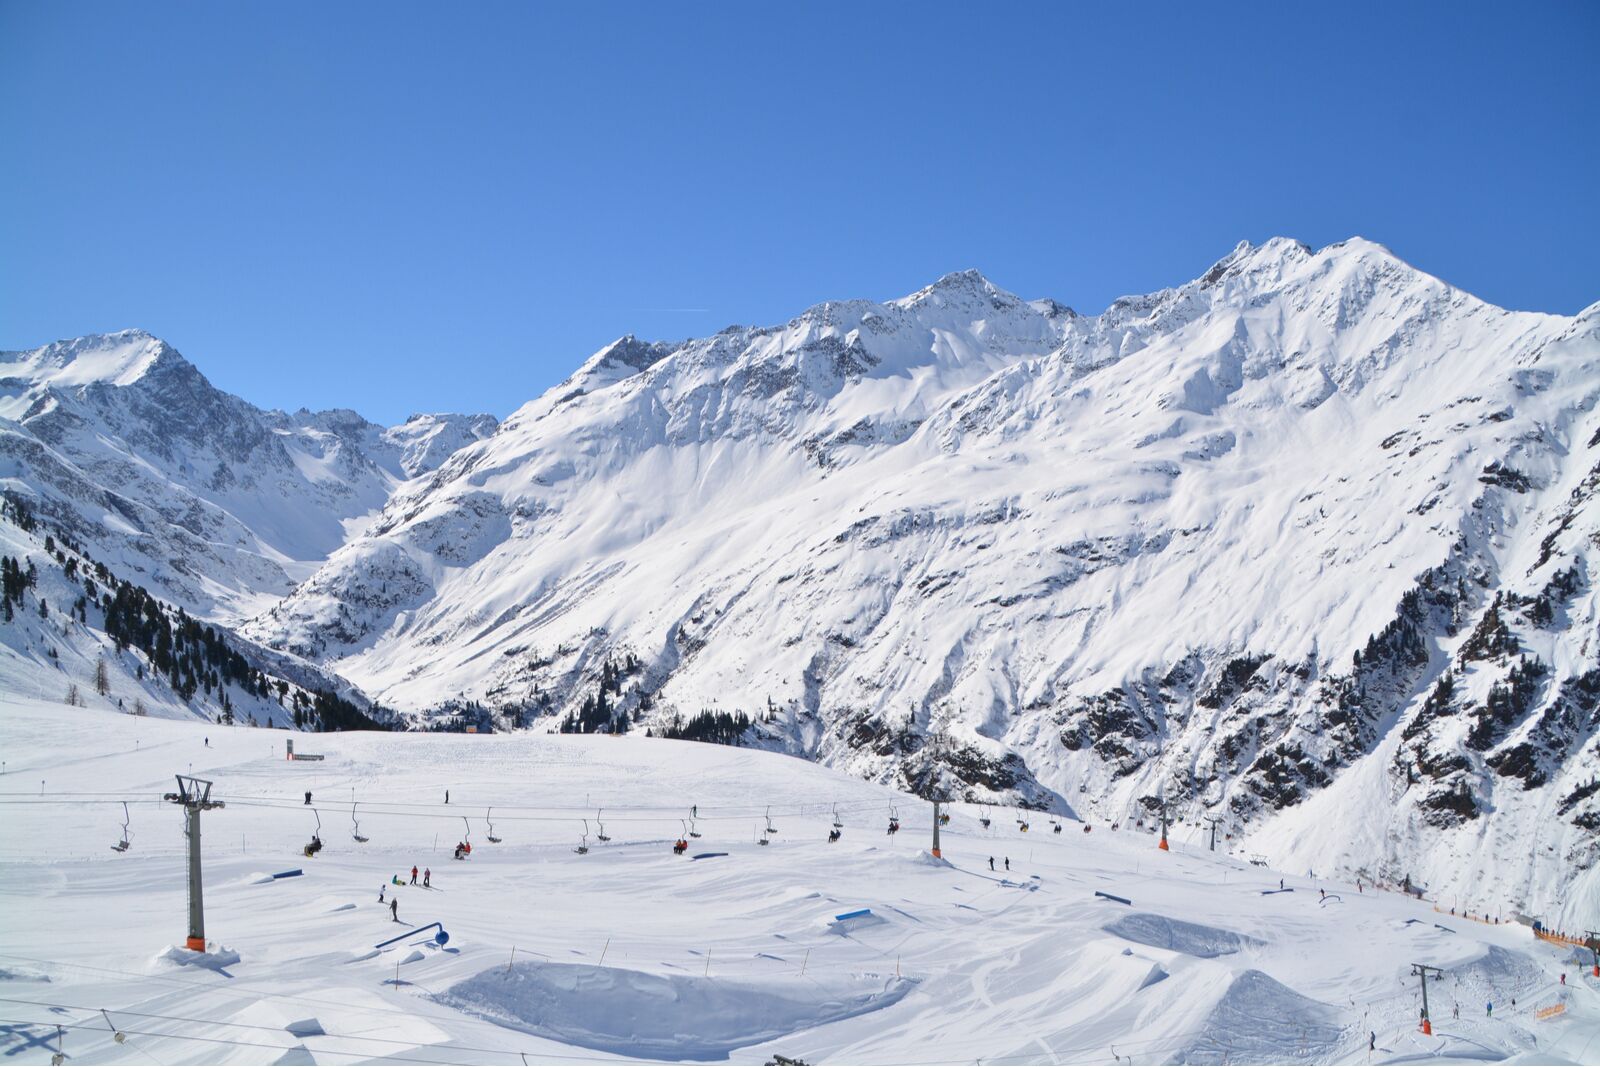 Ski slopes of St. Anton, Austria